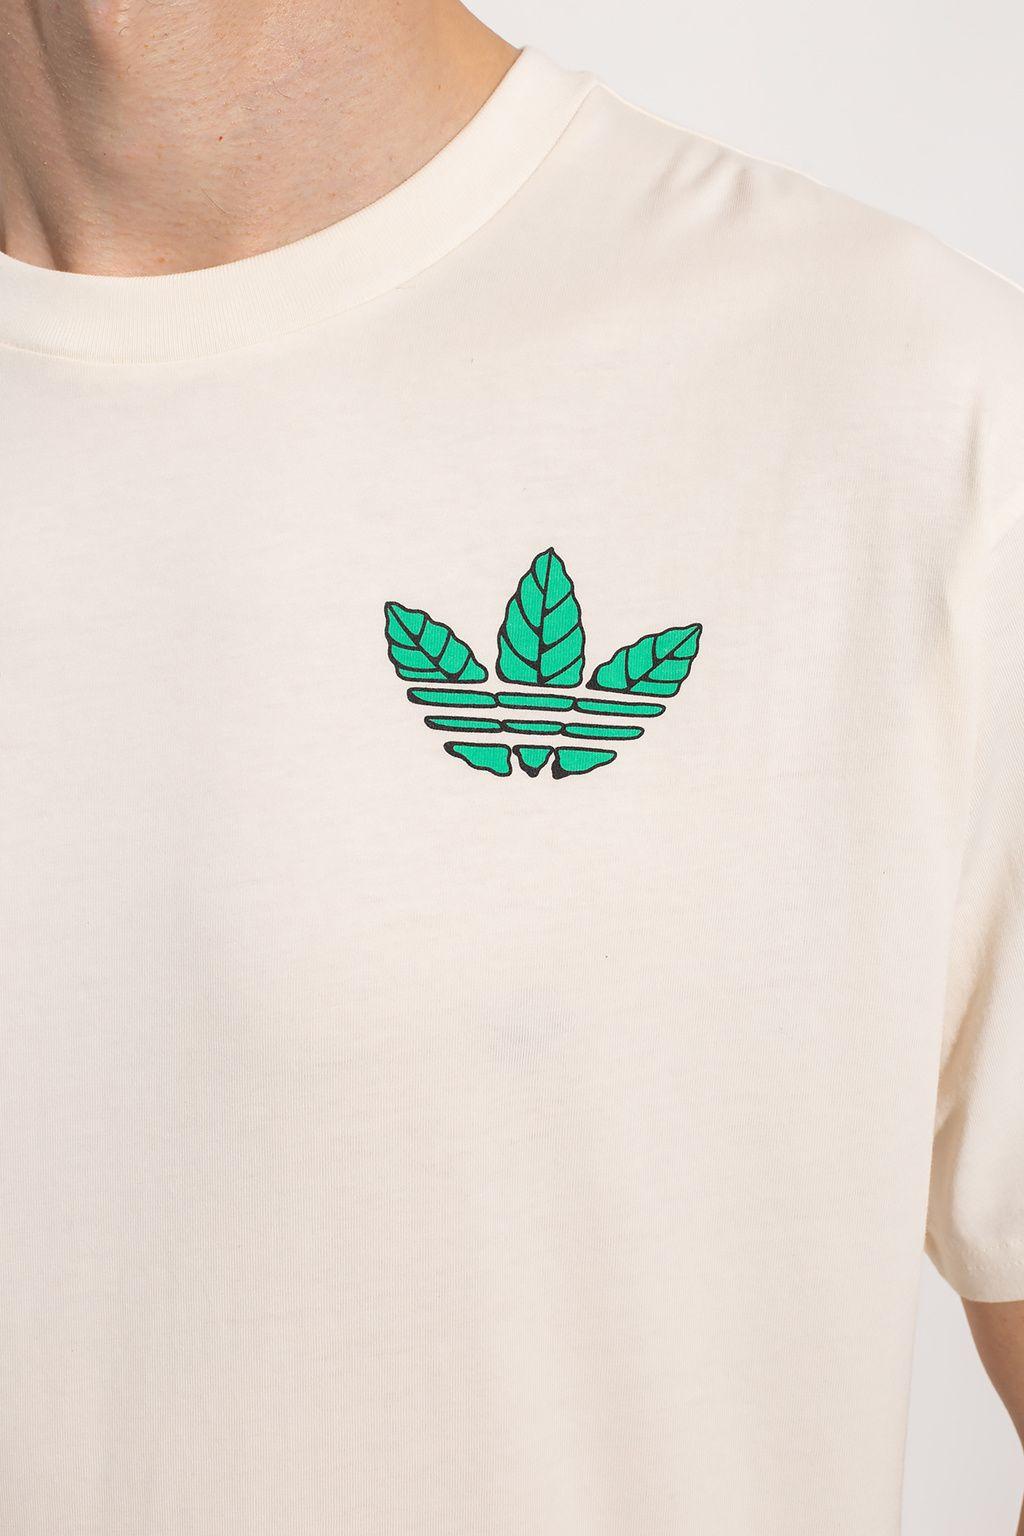 Men Lyst Logo adidas for | in Originals Natural T-shirt